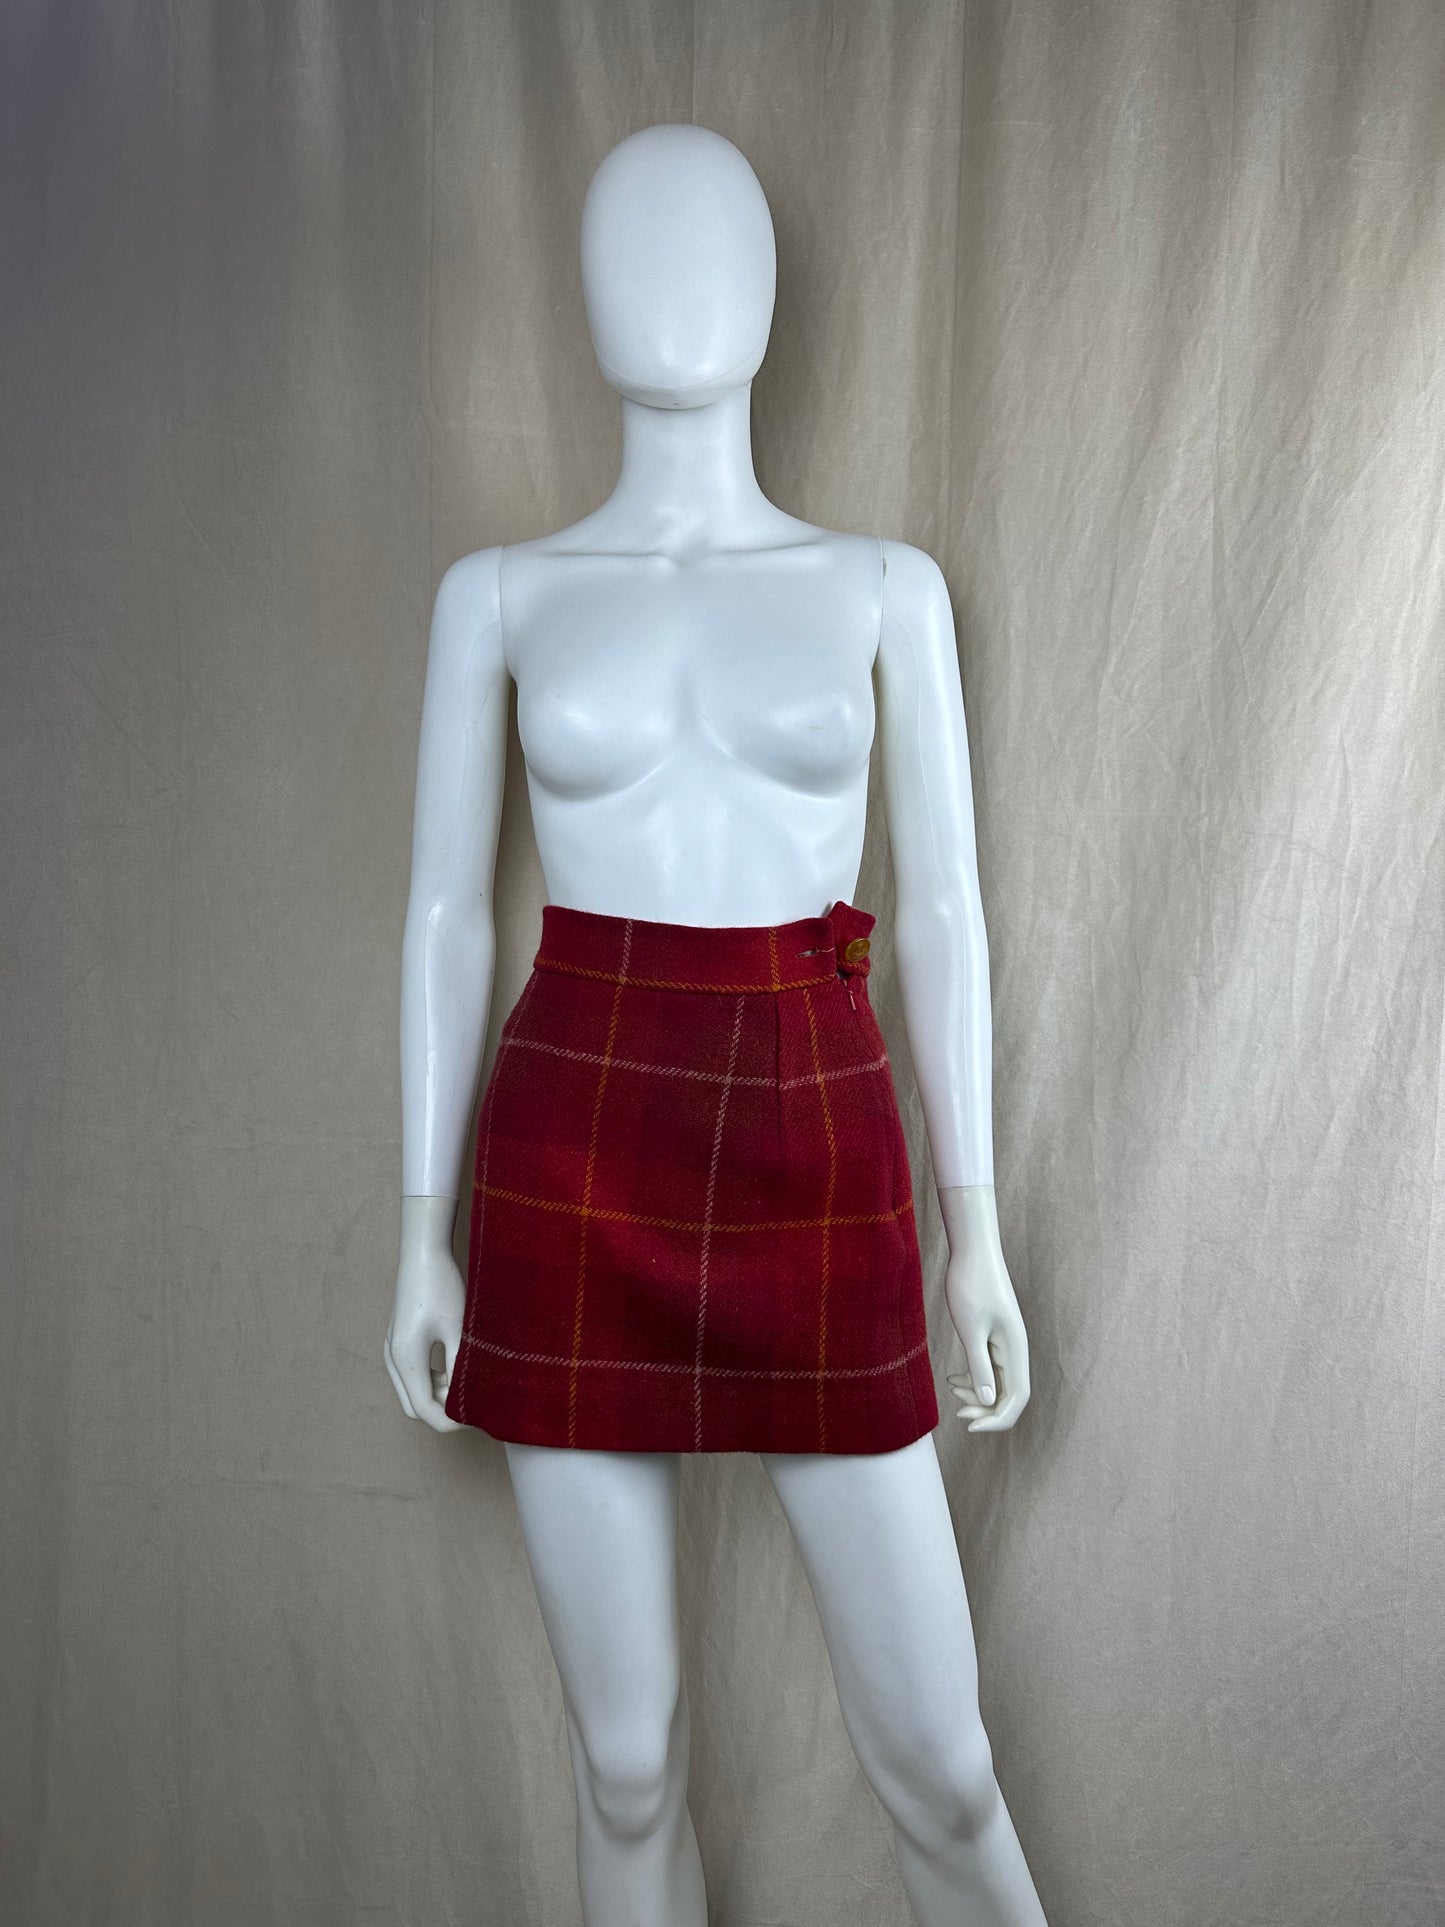 Vivienne Westwood FW 1991 Jacket + Skirt (2) Set